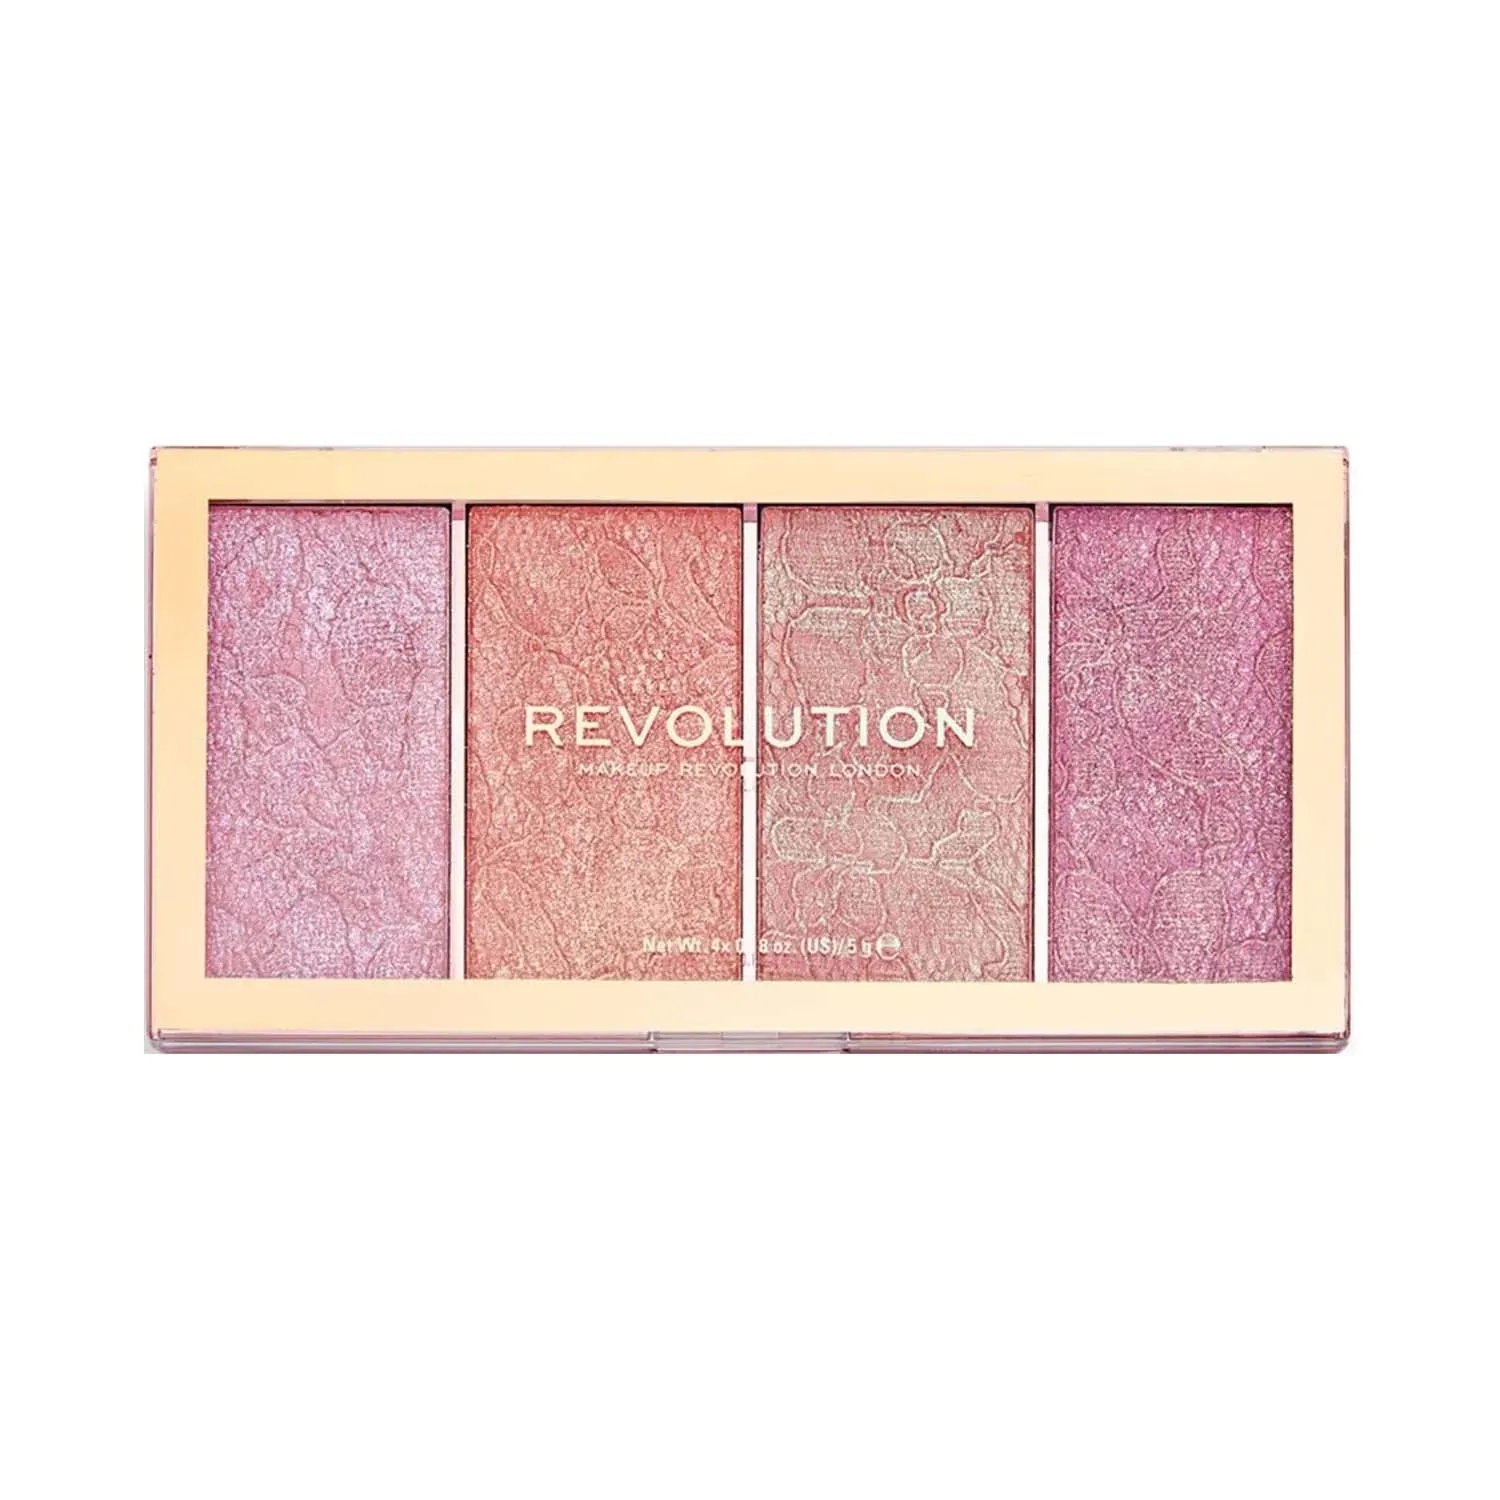 Makeup Revolution | Makeup Revolution Blush Palette - Vintage Lace (20g)